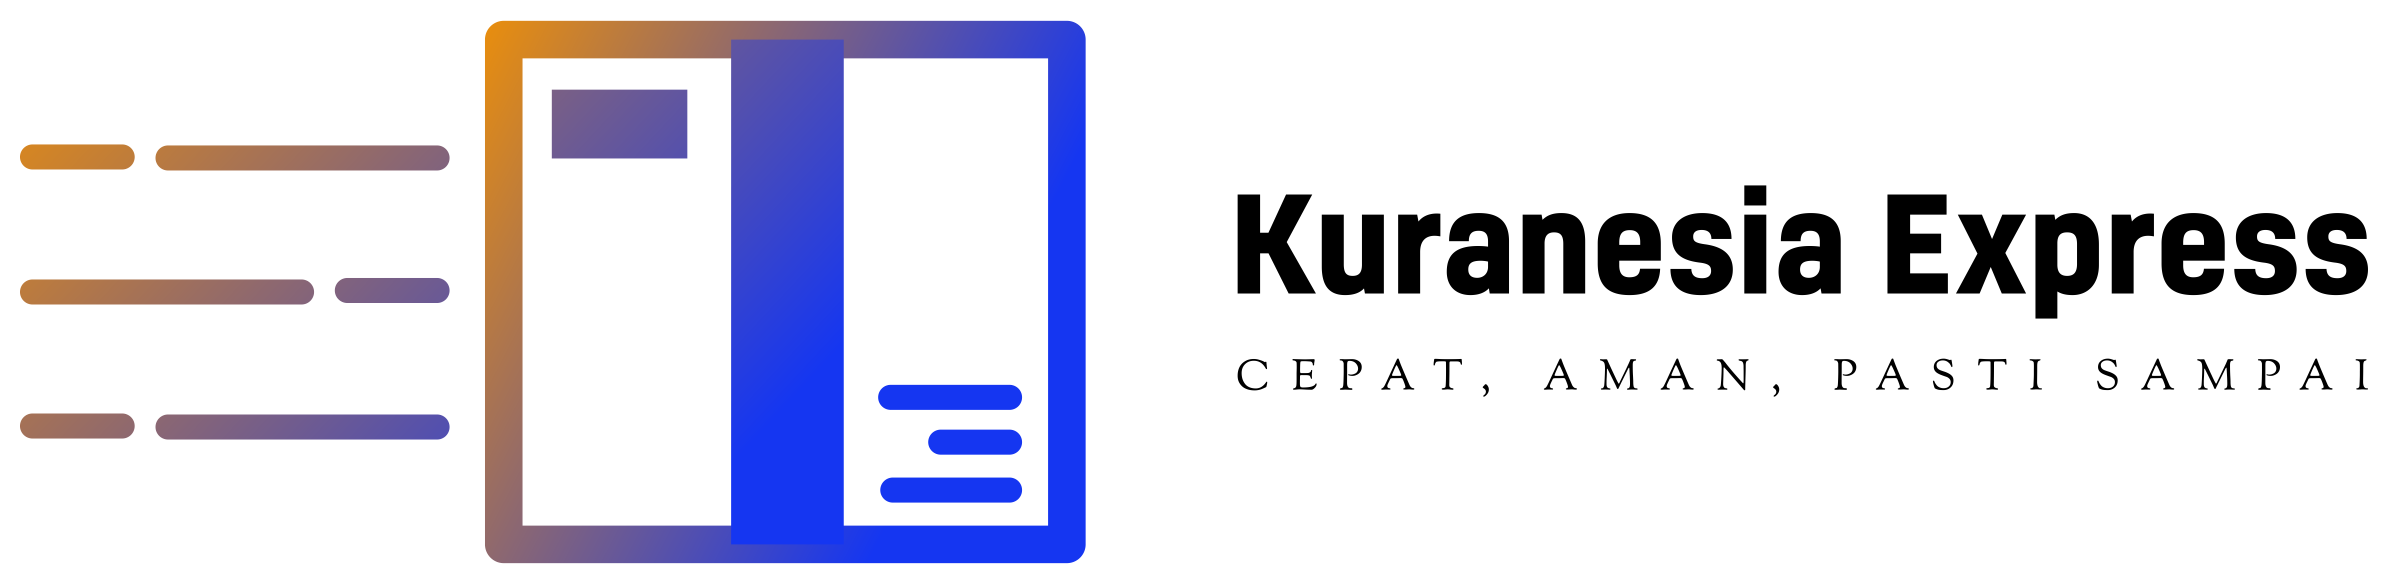 Kuranesia Express